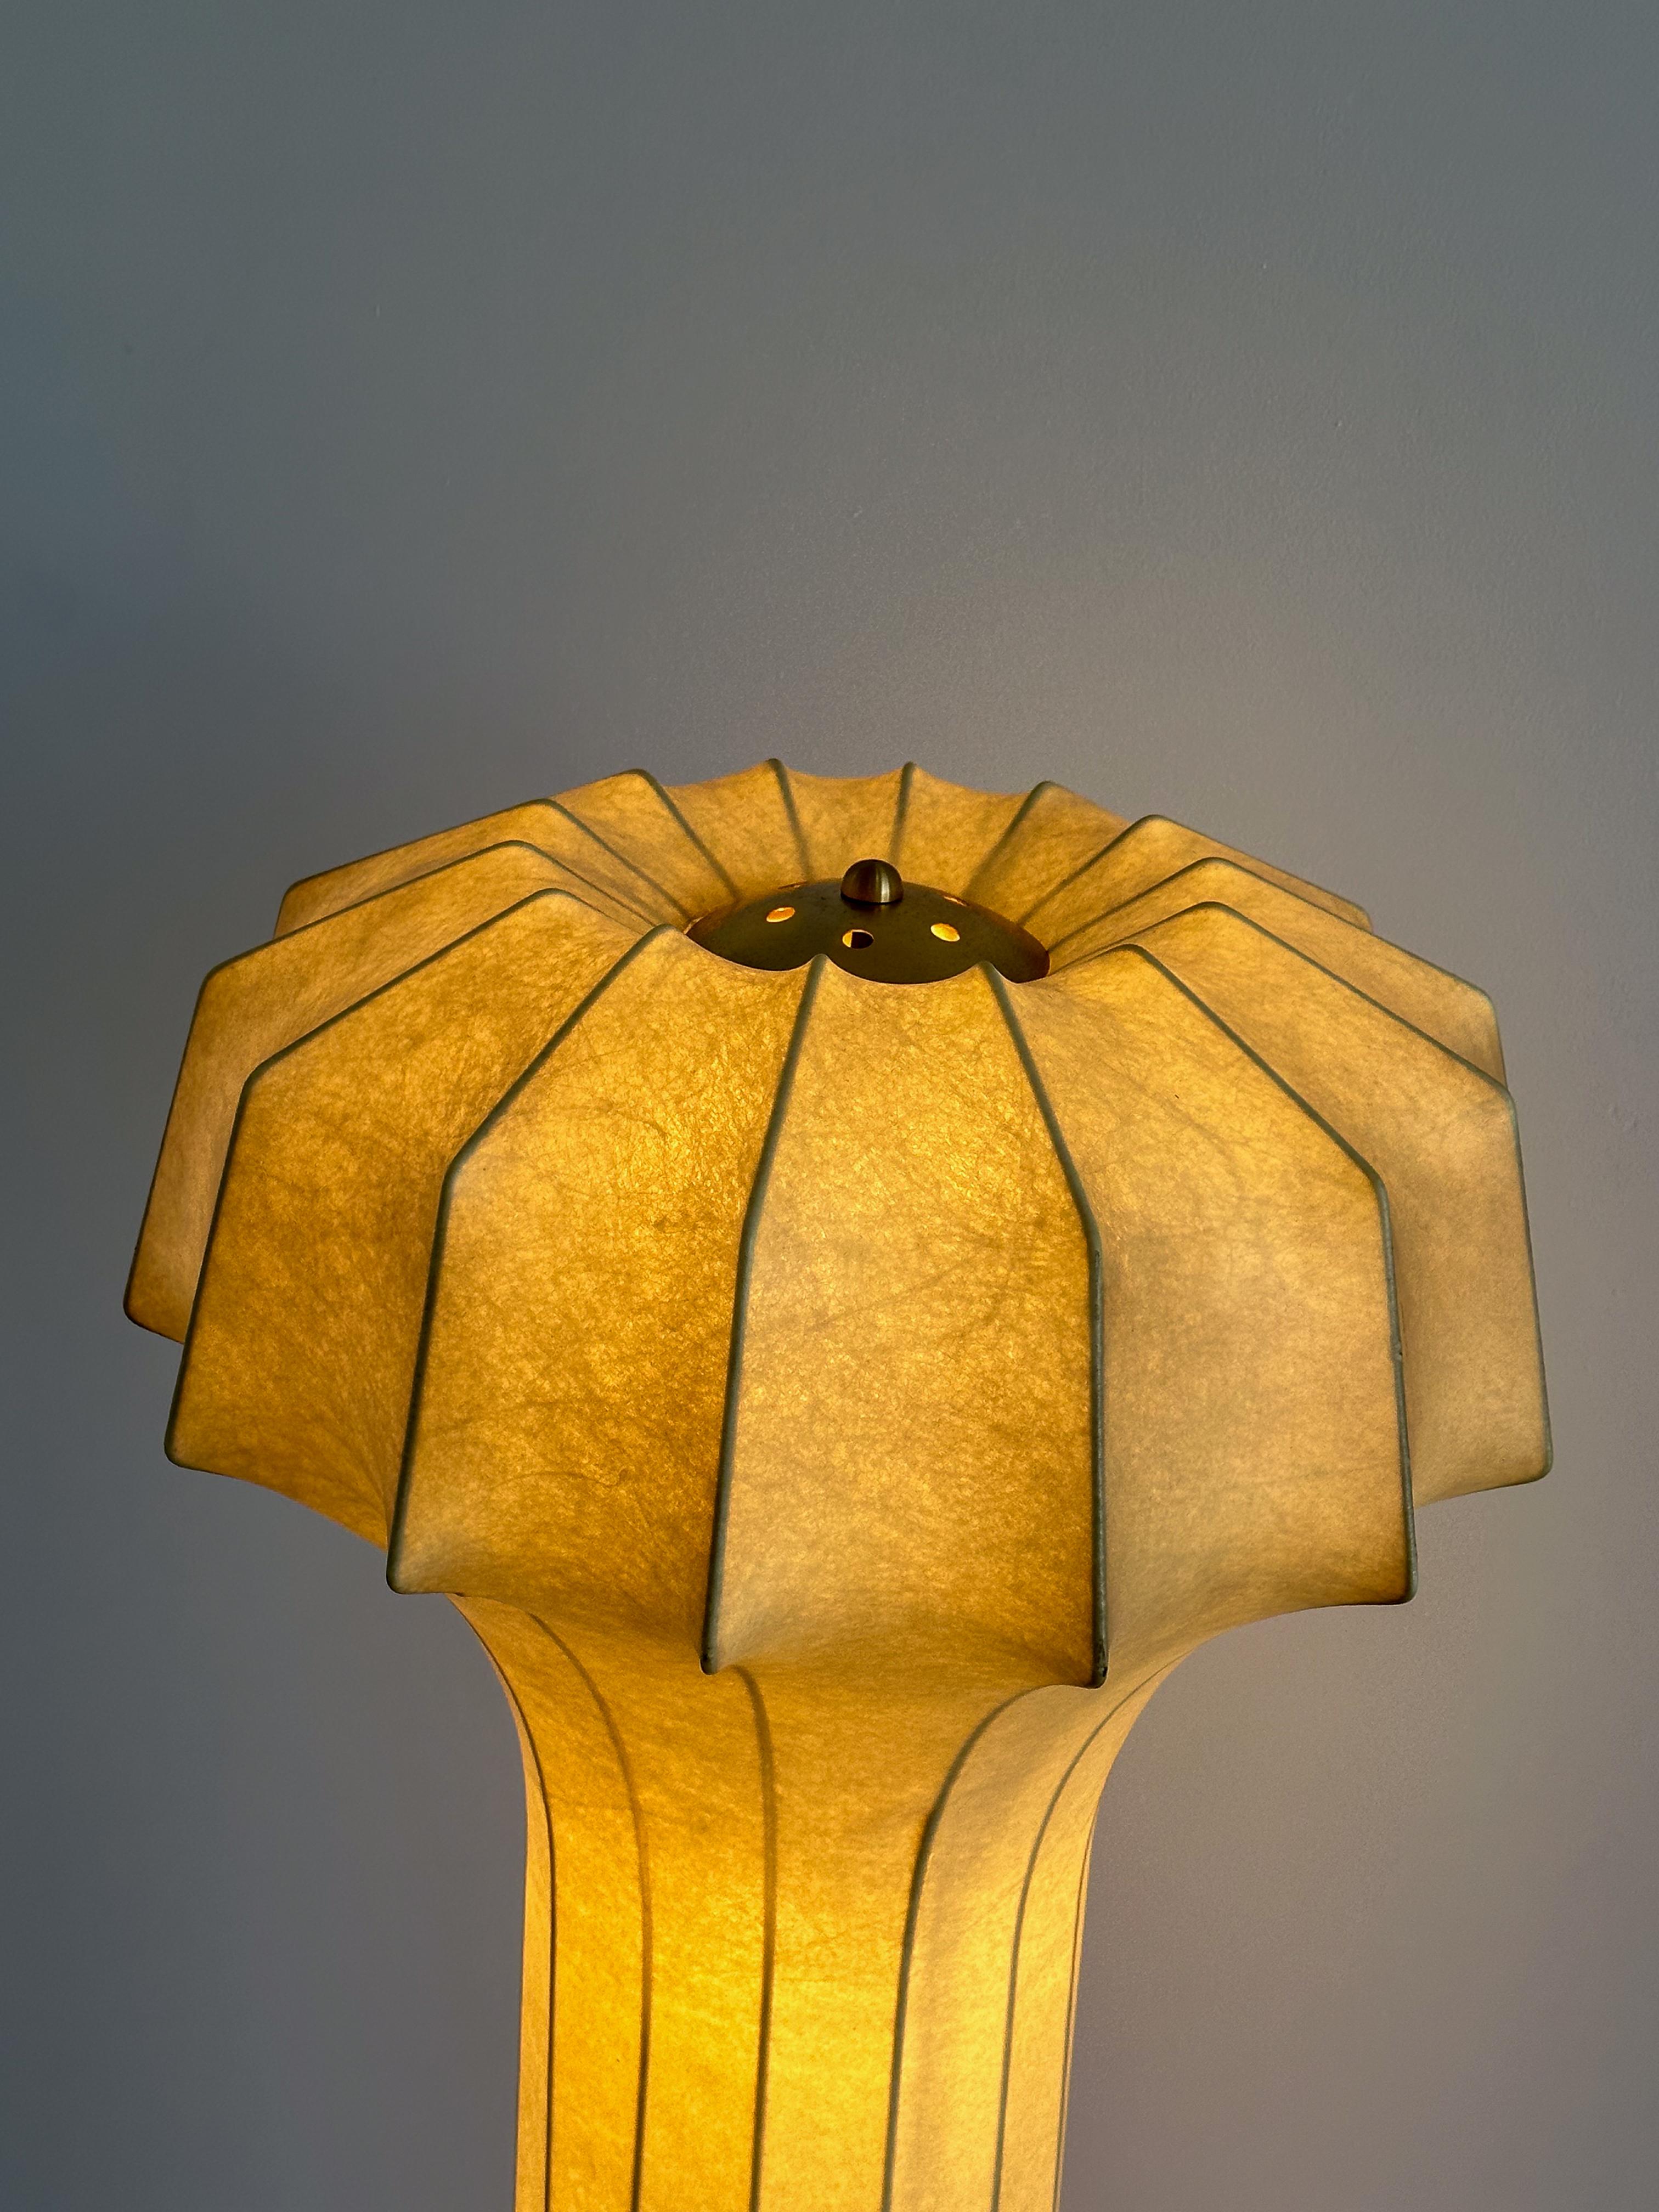 Mid-20th Century Achille & Pier Giacomo Castiglioni Cocoon Floor Lamp For Sale